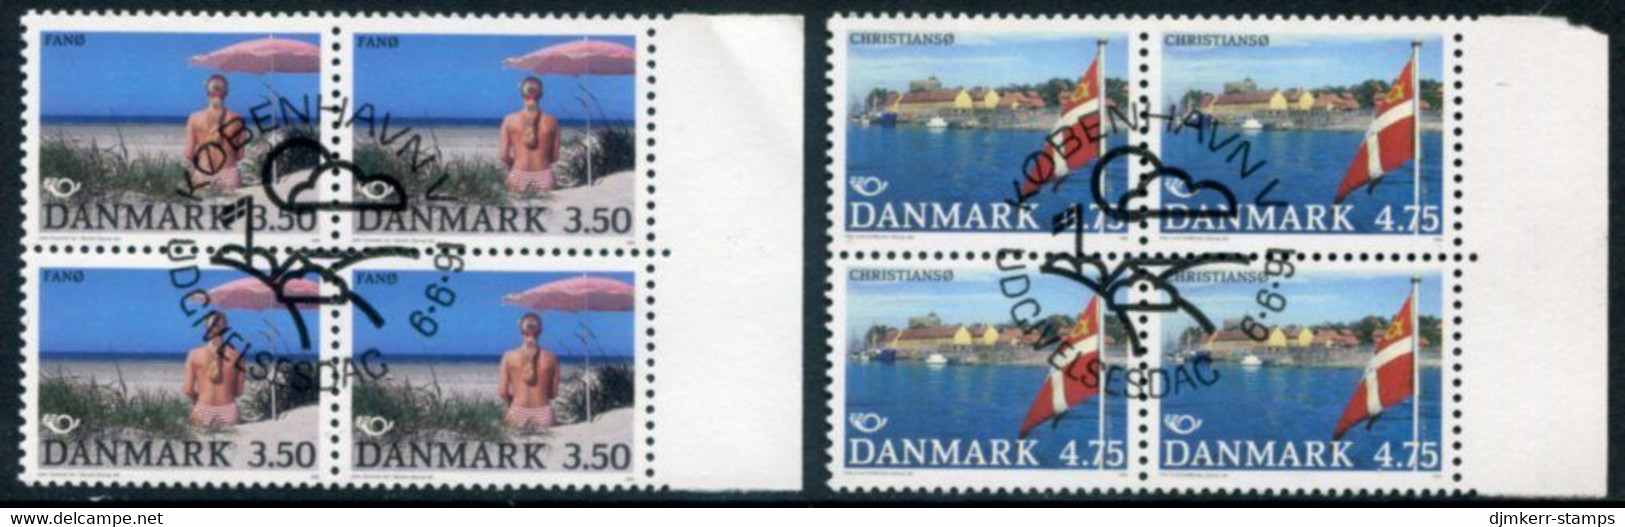 DENMARK 1991 Tourism. Blocks Of 4 Used.   Michel 1003-04 - Gebruikt